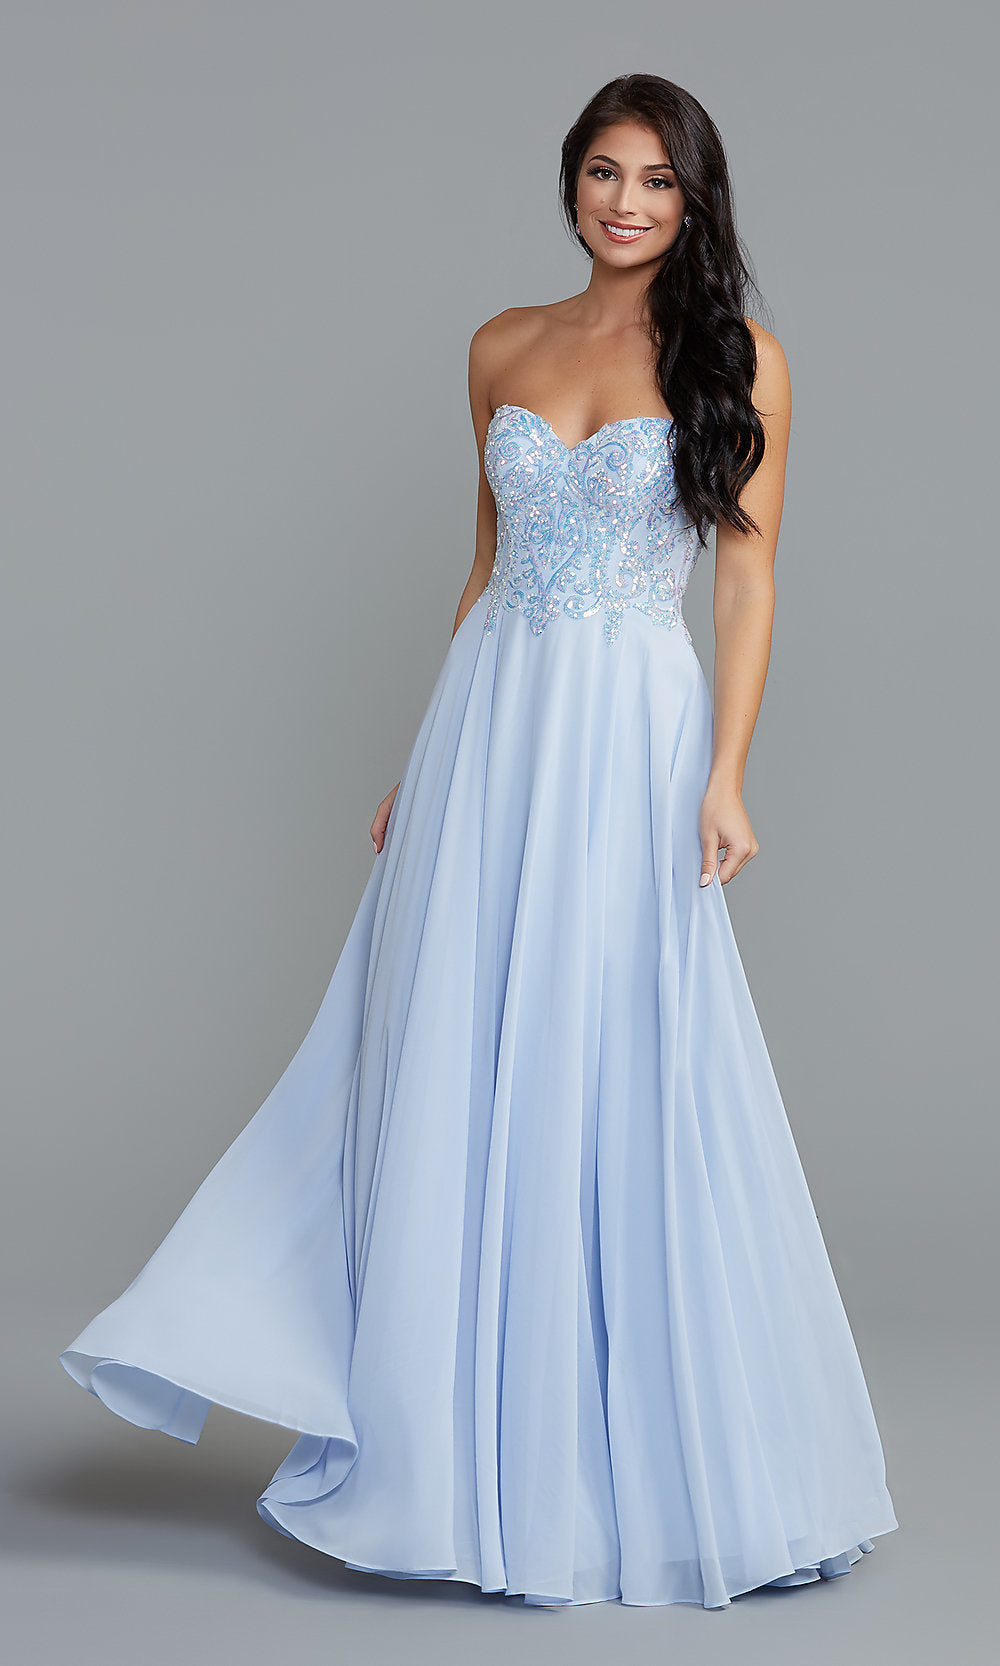 Sparkly Long Light Blue Prom Dress -PromGirl